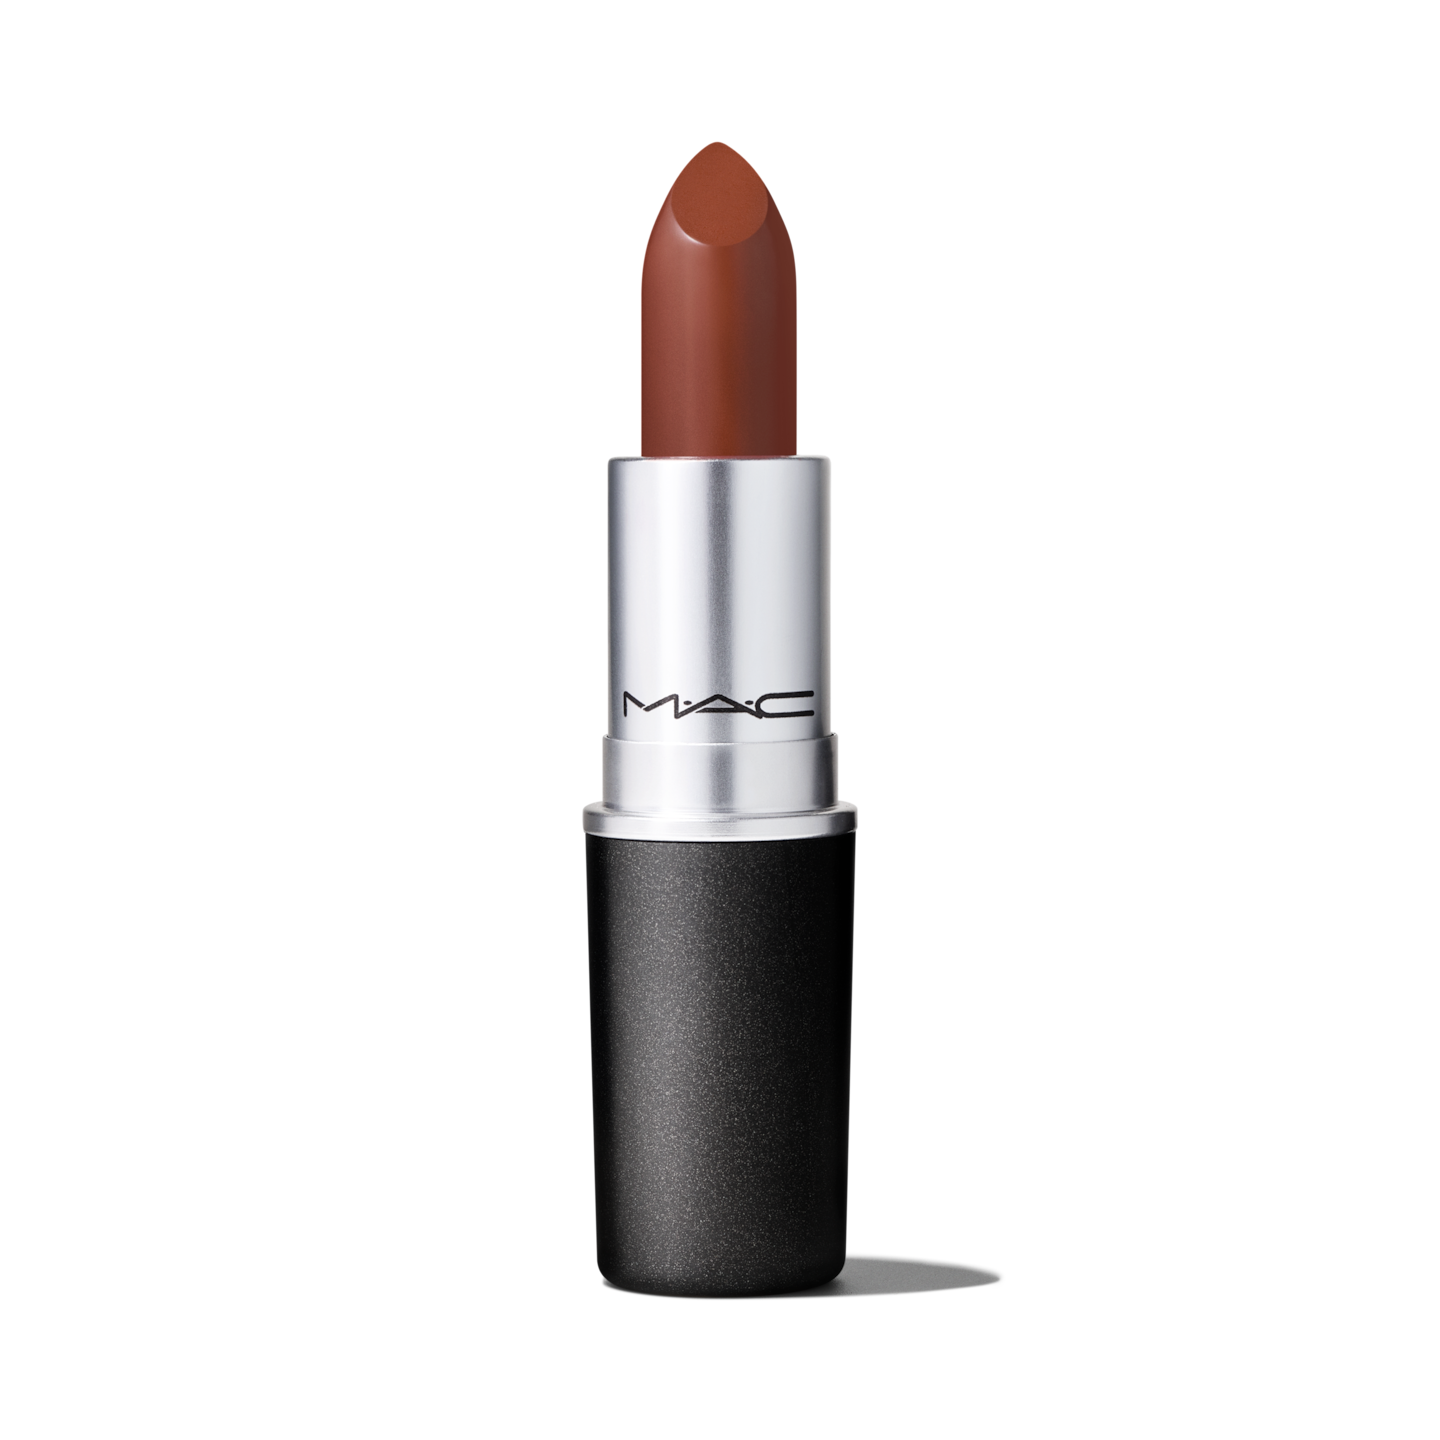 MAC Lipstick | Marrakesh, Velvet Teddy, Mehr & Taupe Lipsticks | MAC Cosmetics - Official